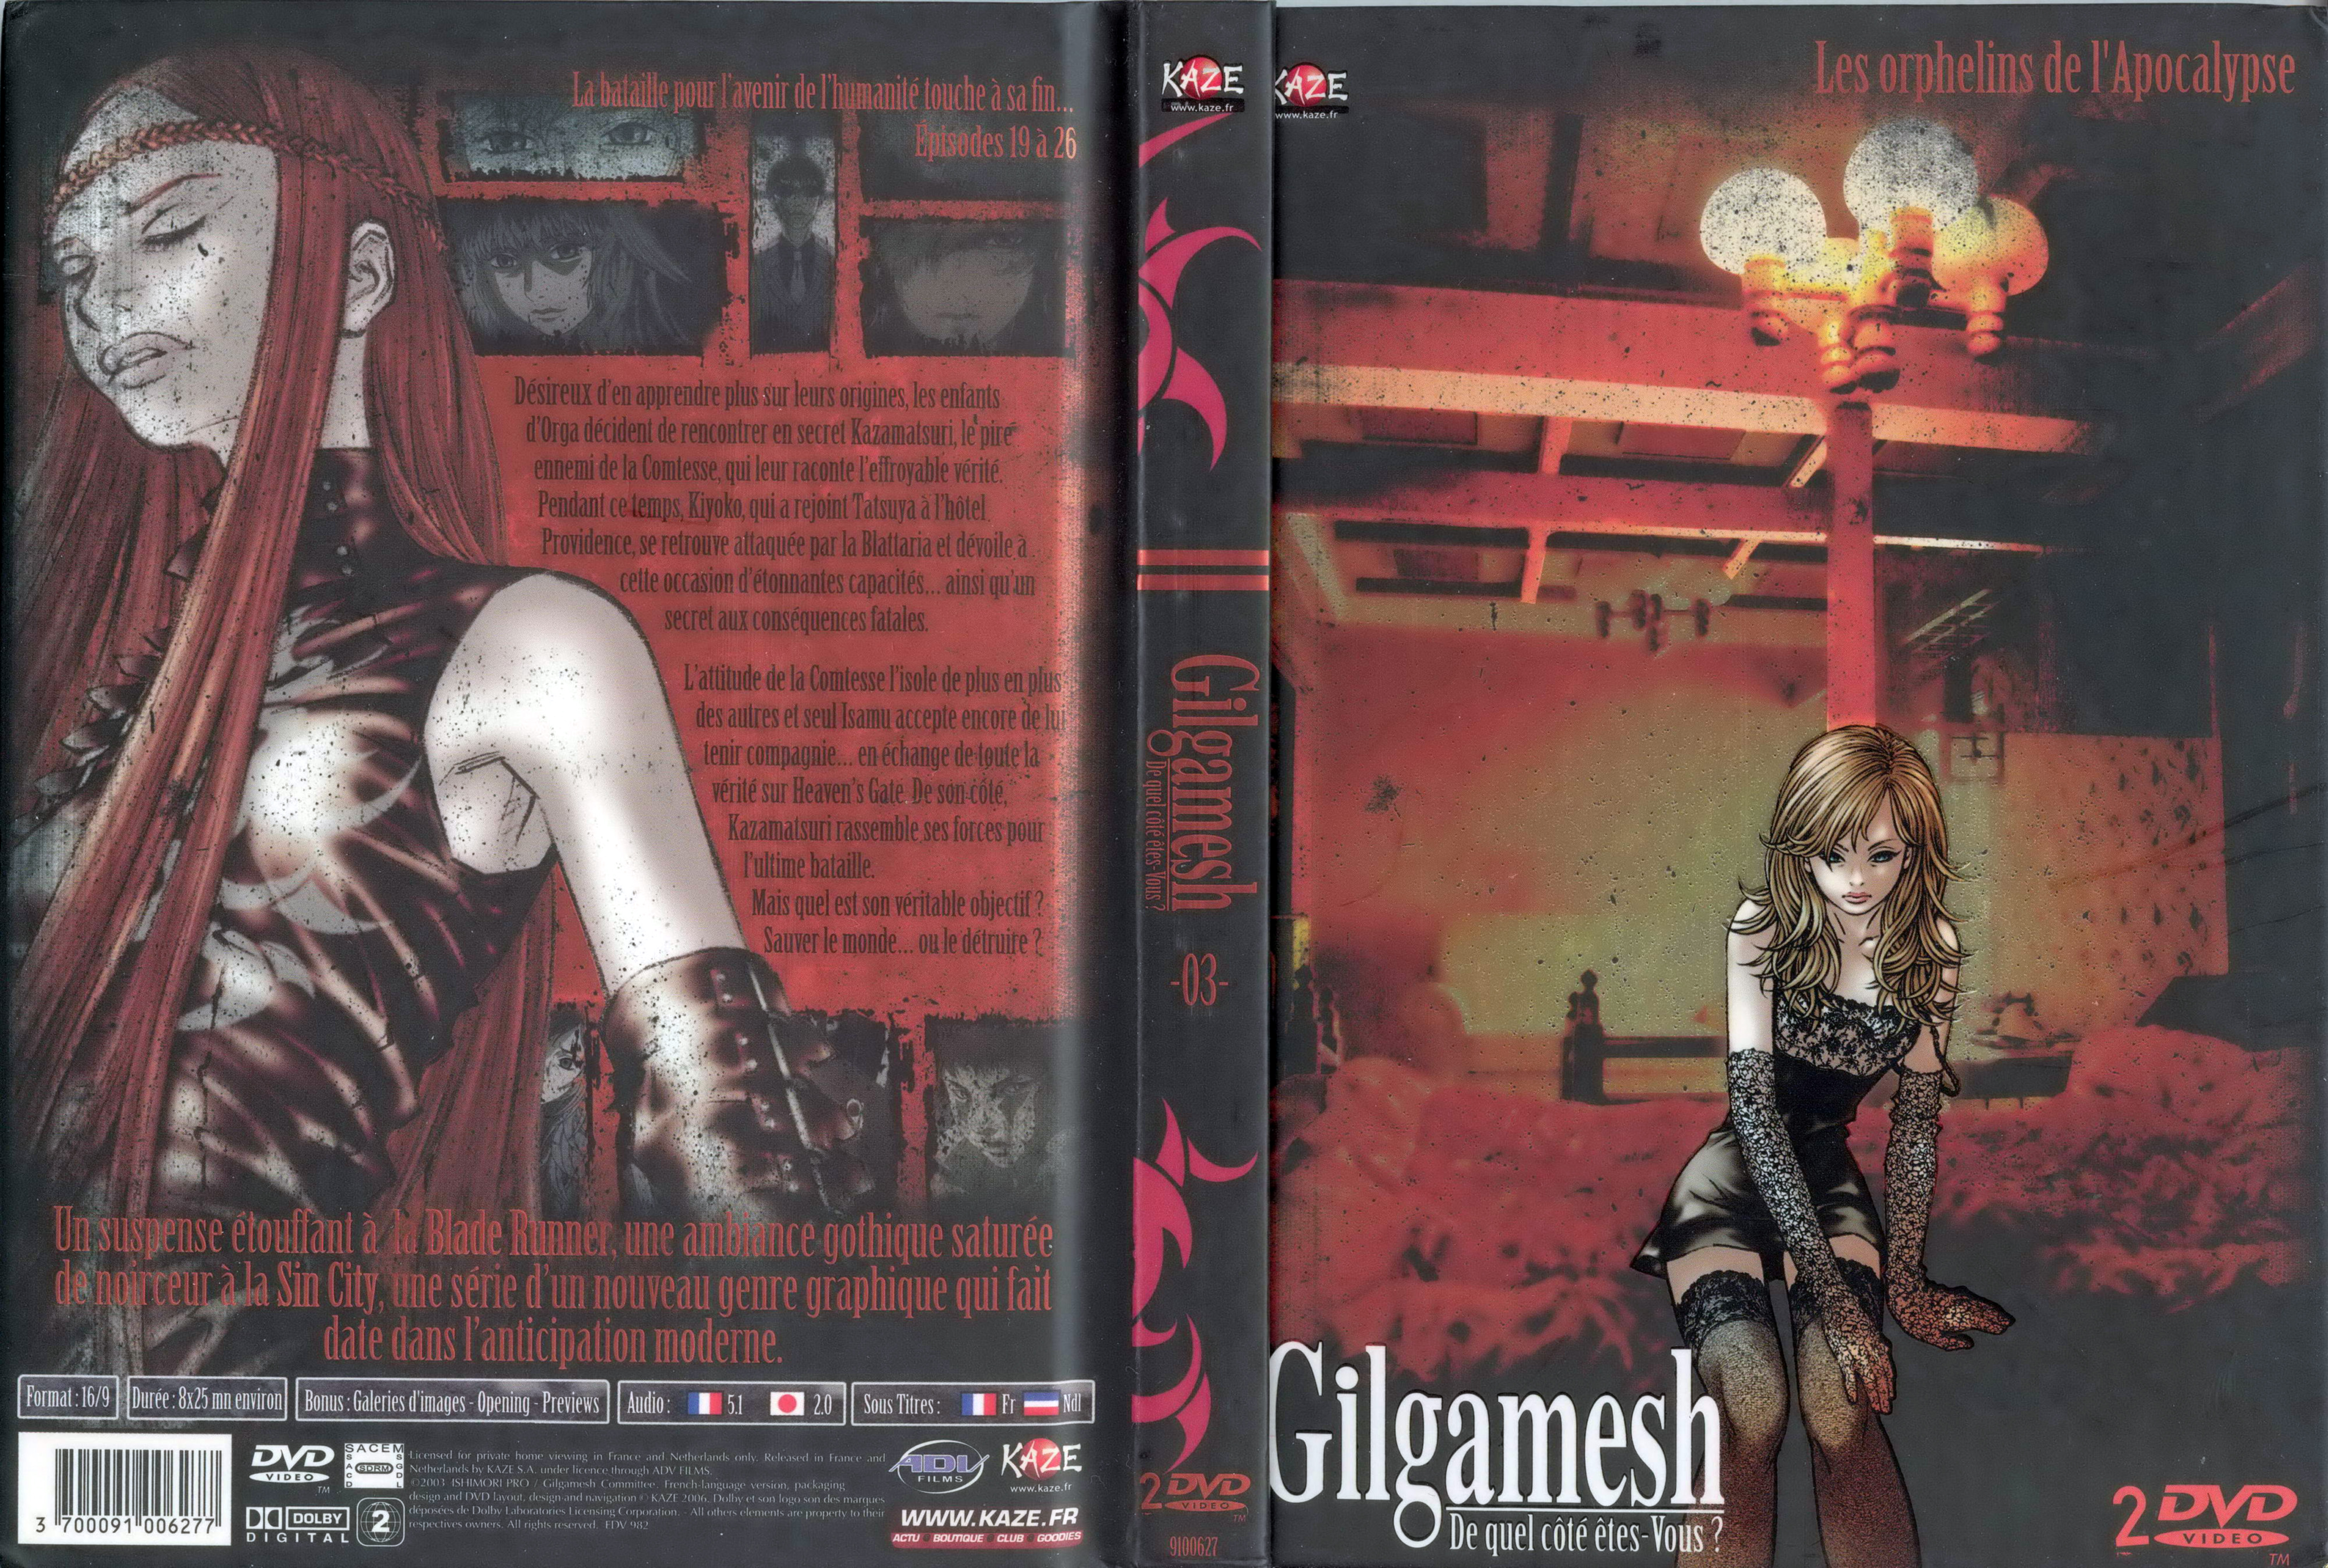 Jaquette DVD Gilgamesh vol 3